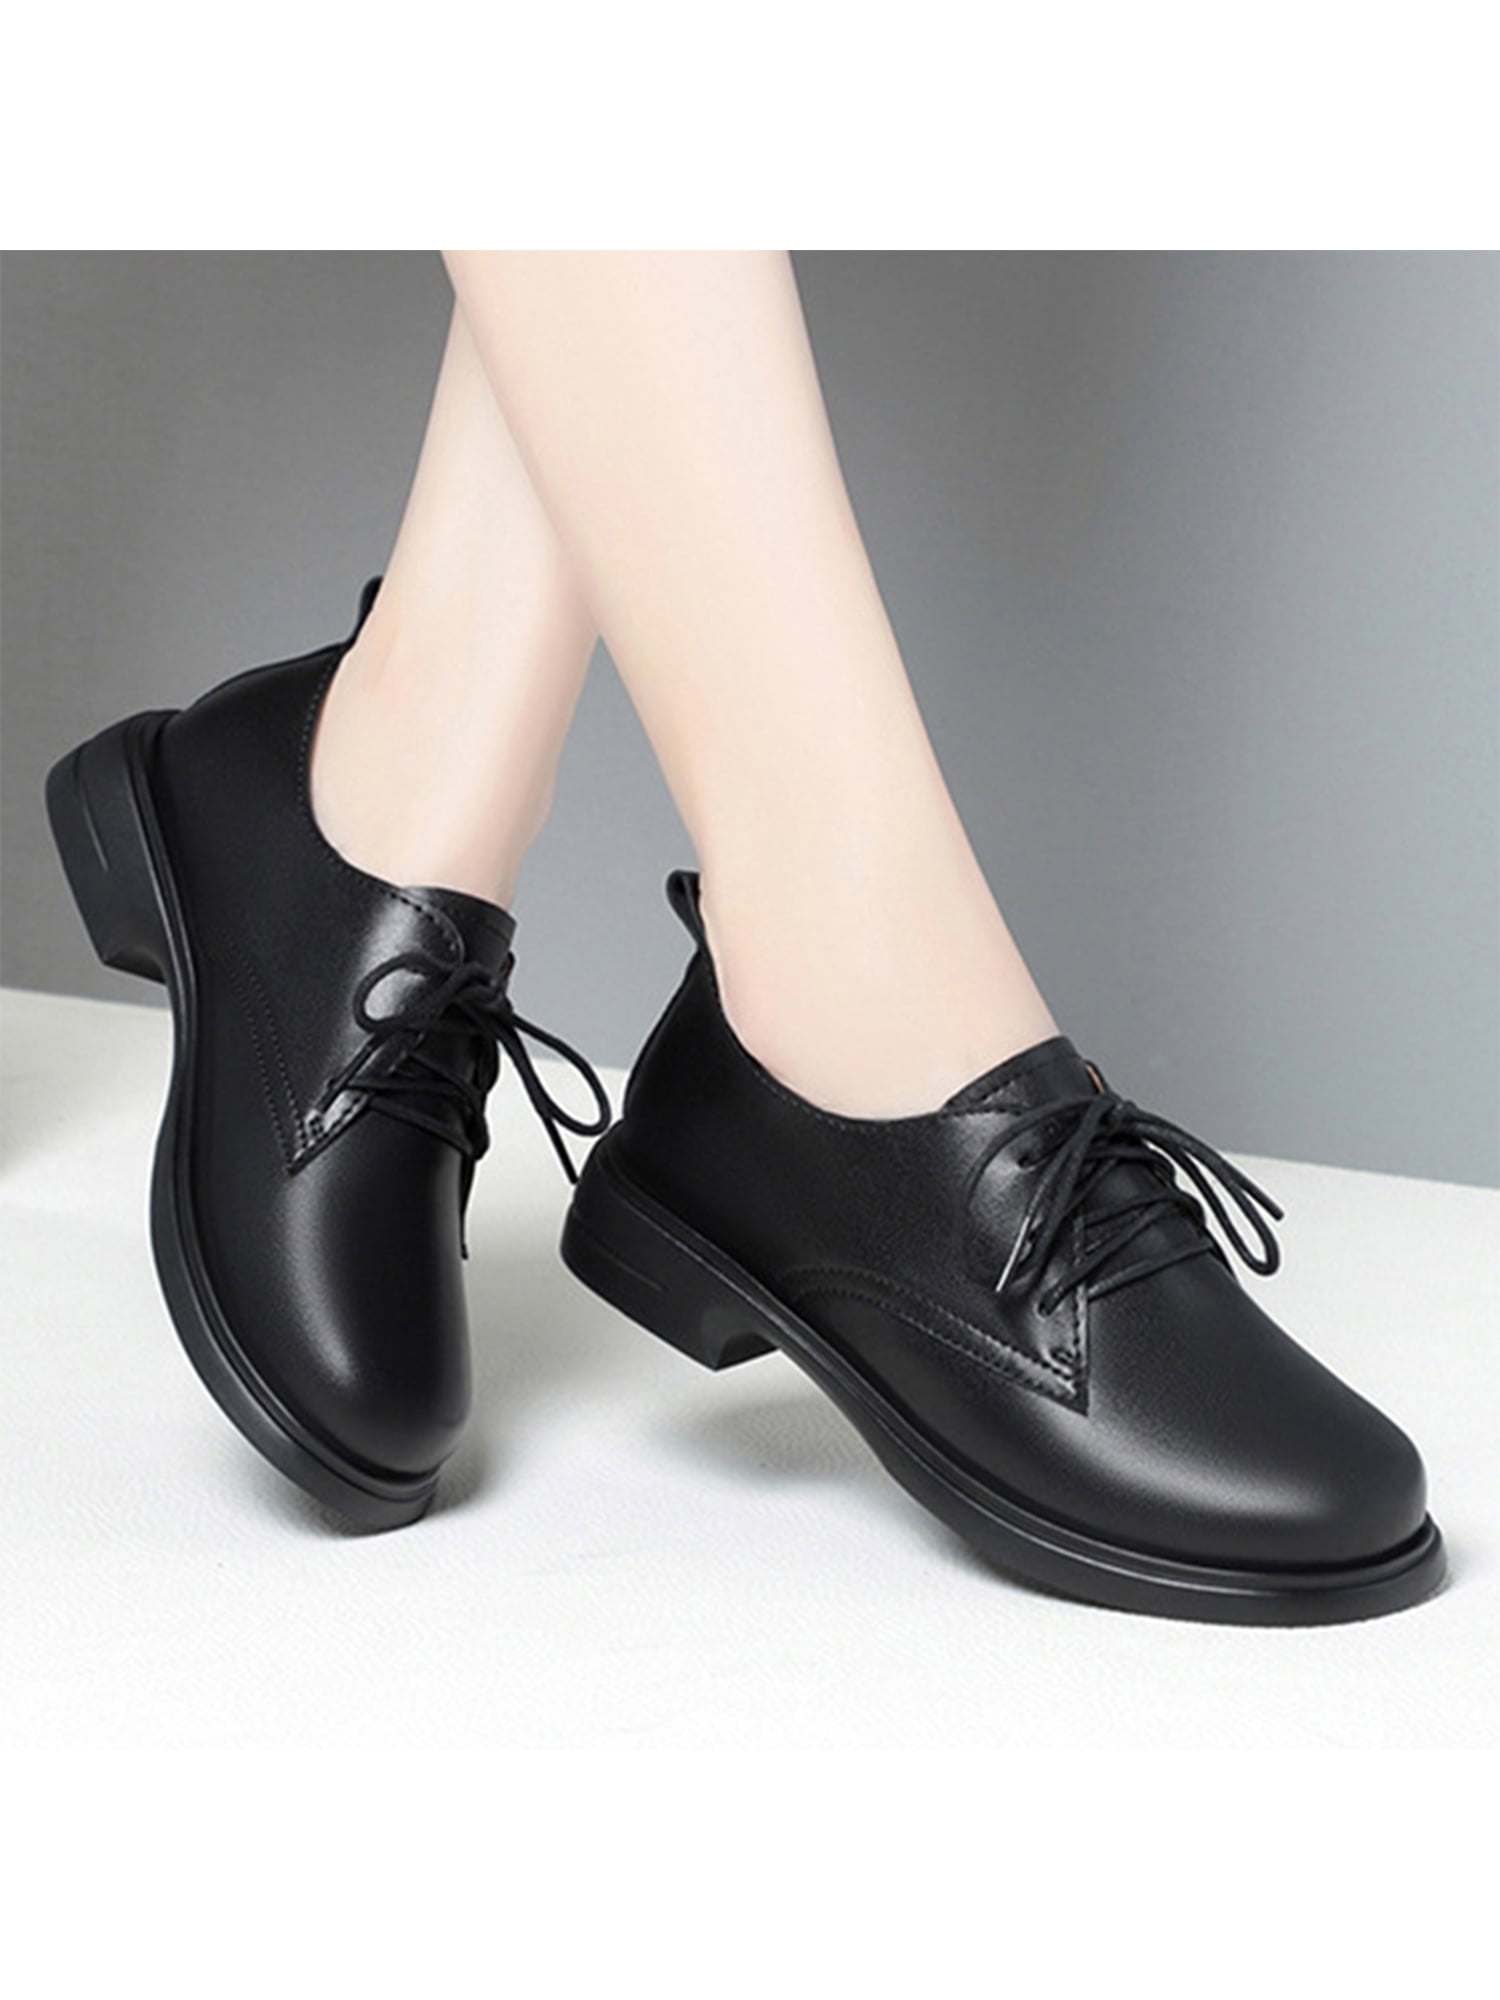 black dress shoes womens